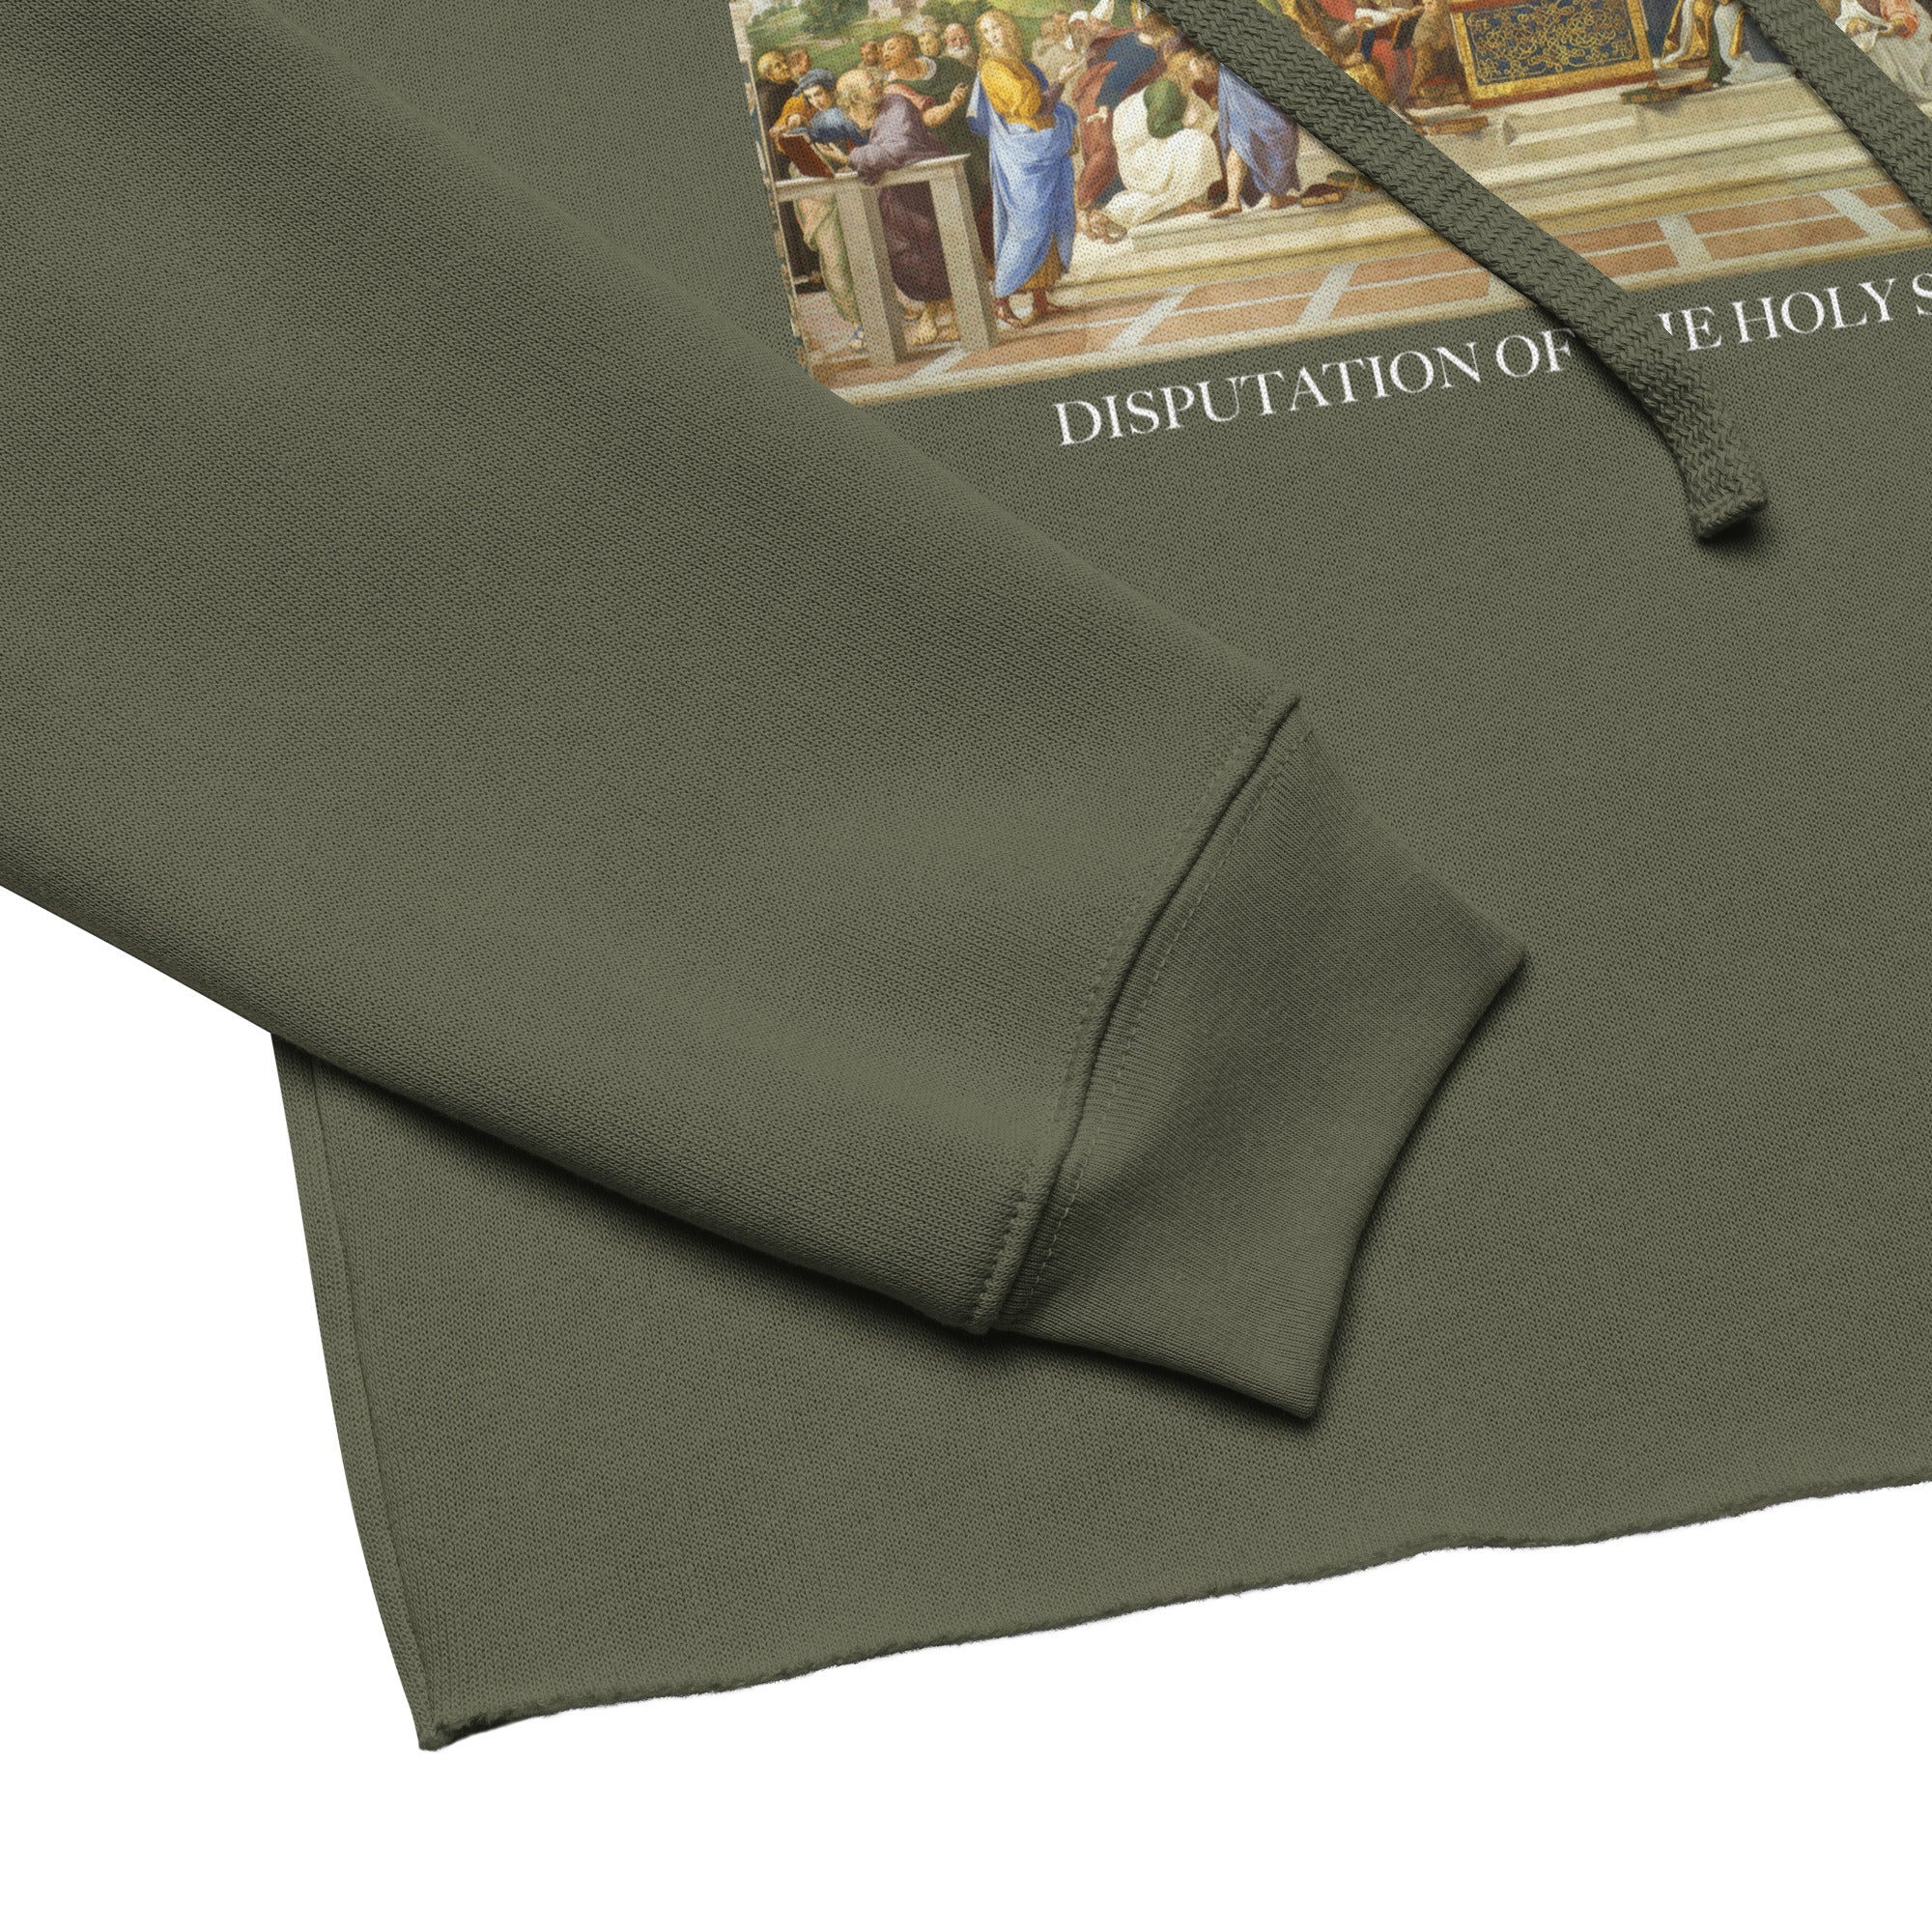 Raphael 'Disputation des Heiligen Sakraments' Berühmtes Gemälde Kurzer Hoodie | Premium Art Kurzer Hoodie